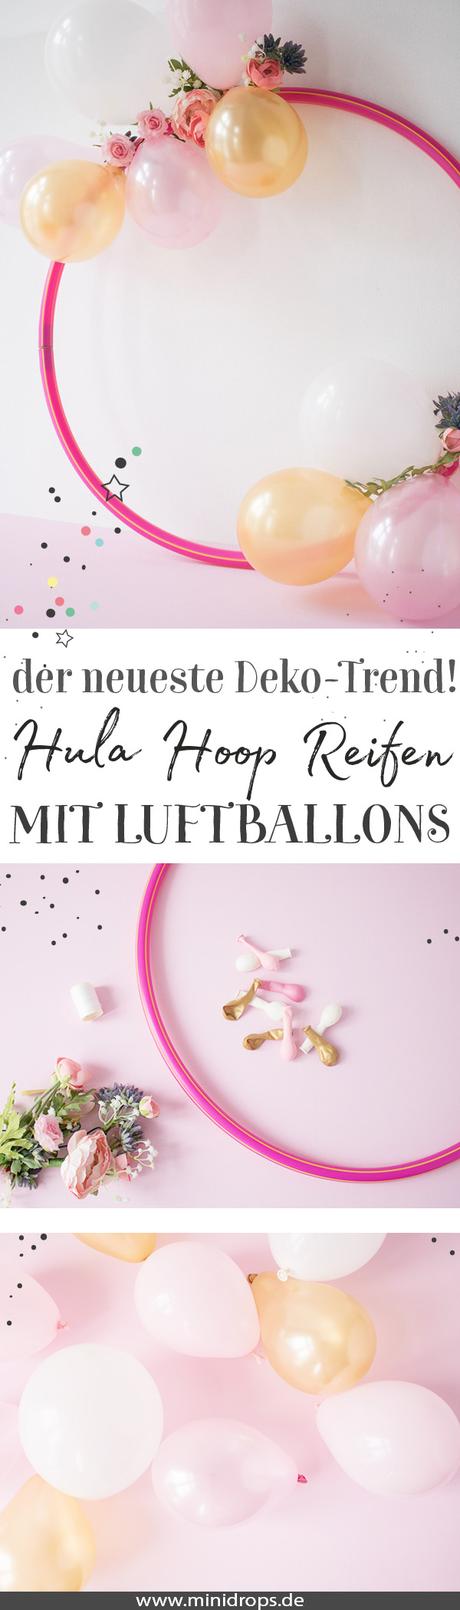 Luftballons mit Hula Hoop Reifen Anleitung